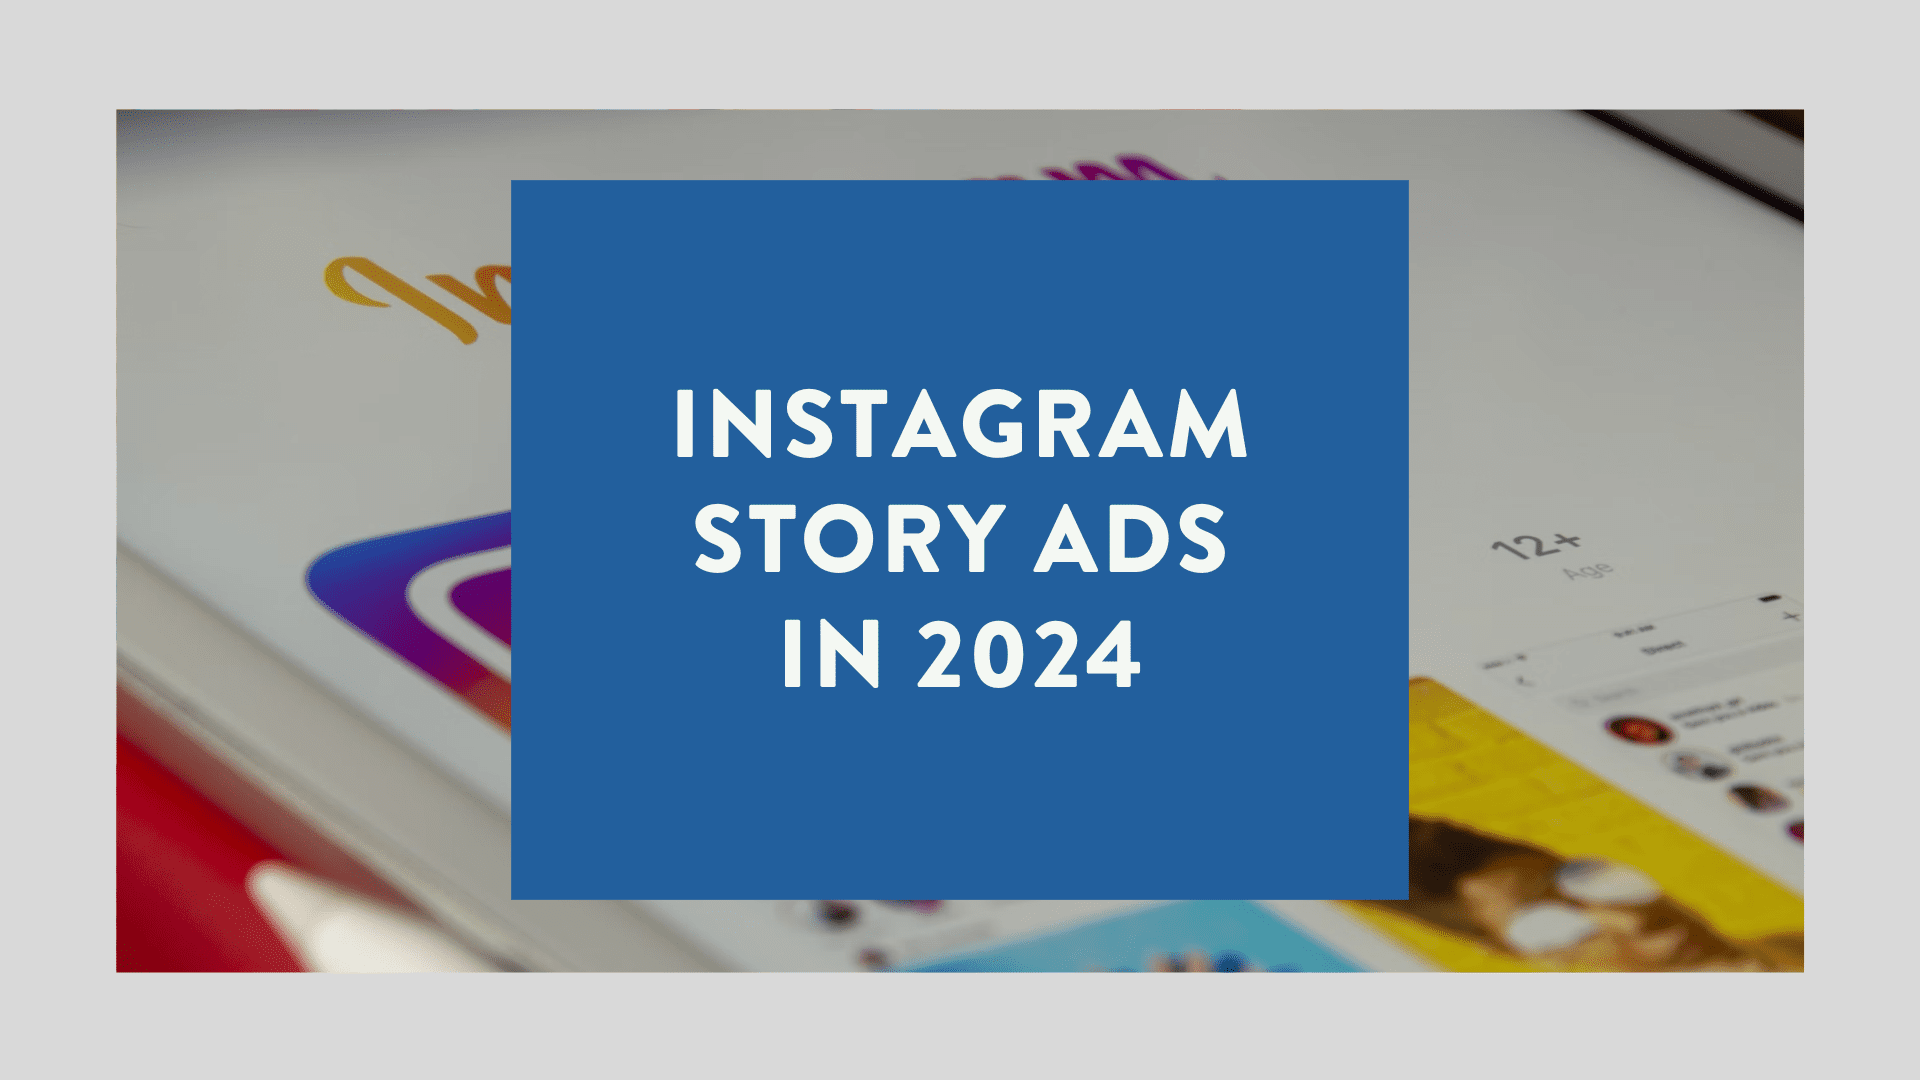 Instagram story ads in 2024